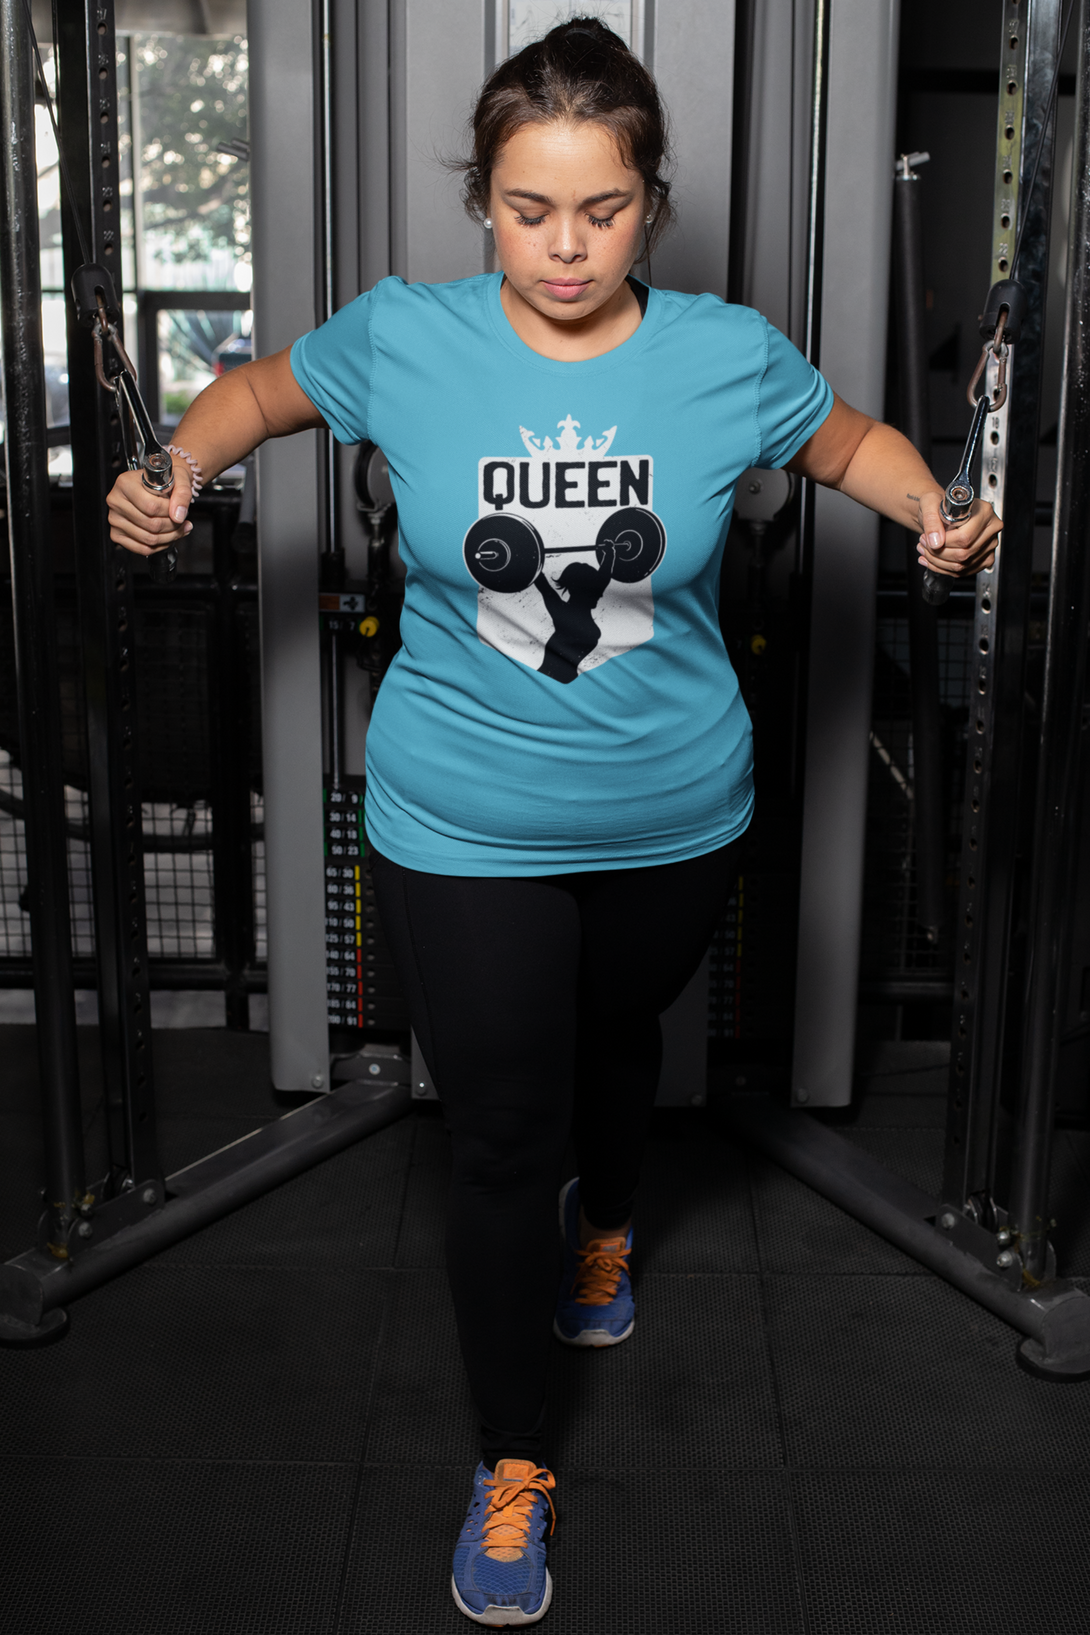 Queen Printed T-Shirt For Women - WowWaves - 4